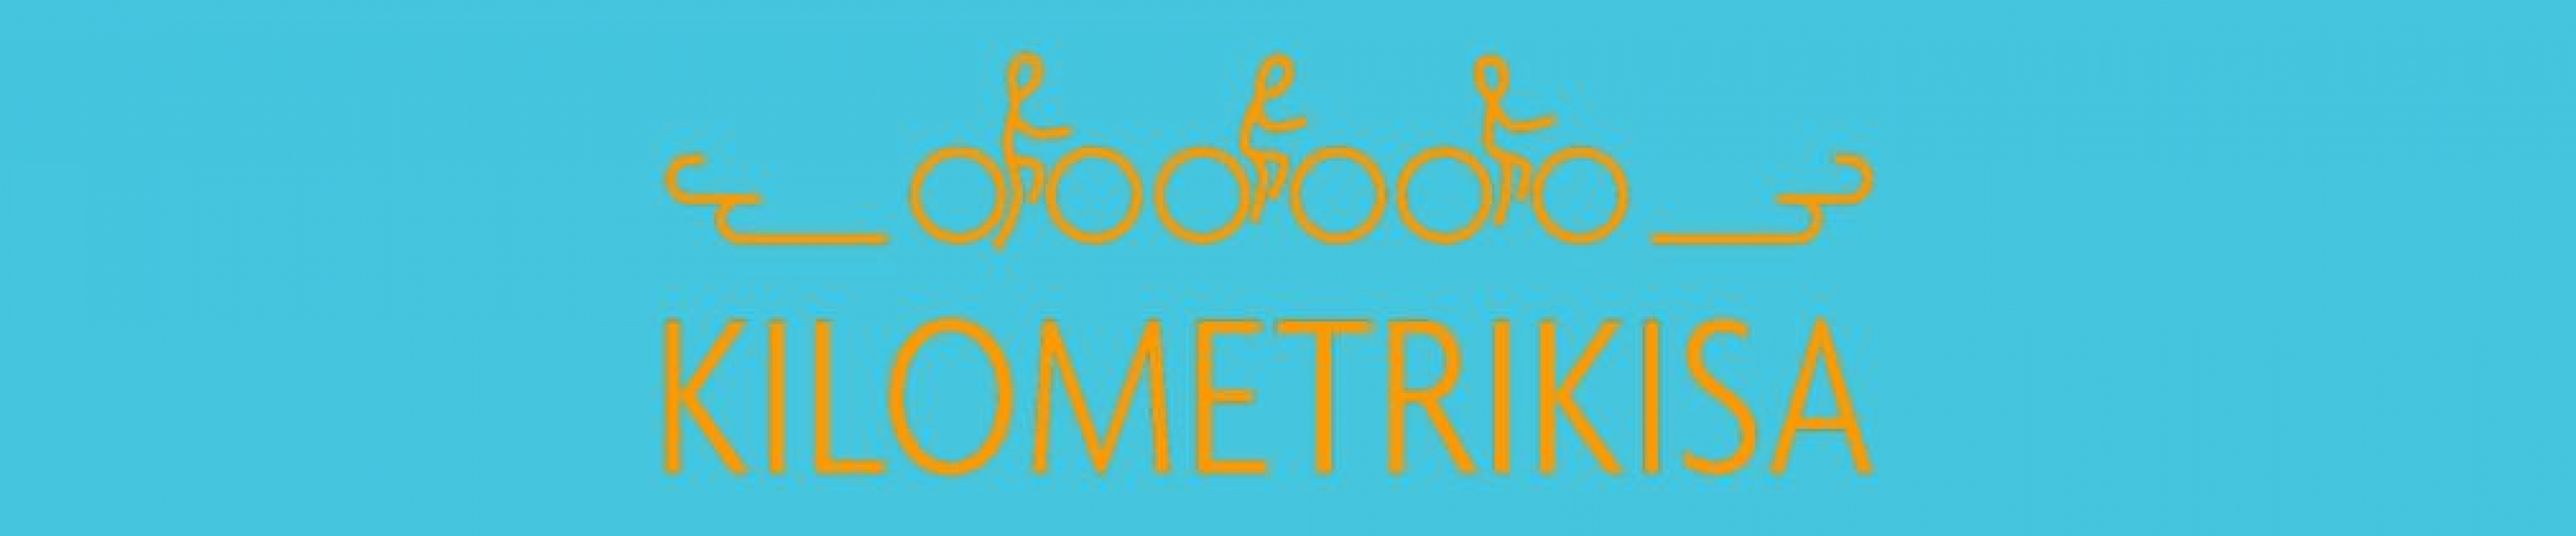 kilometrikisa logo